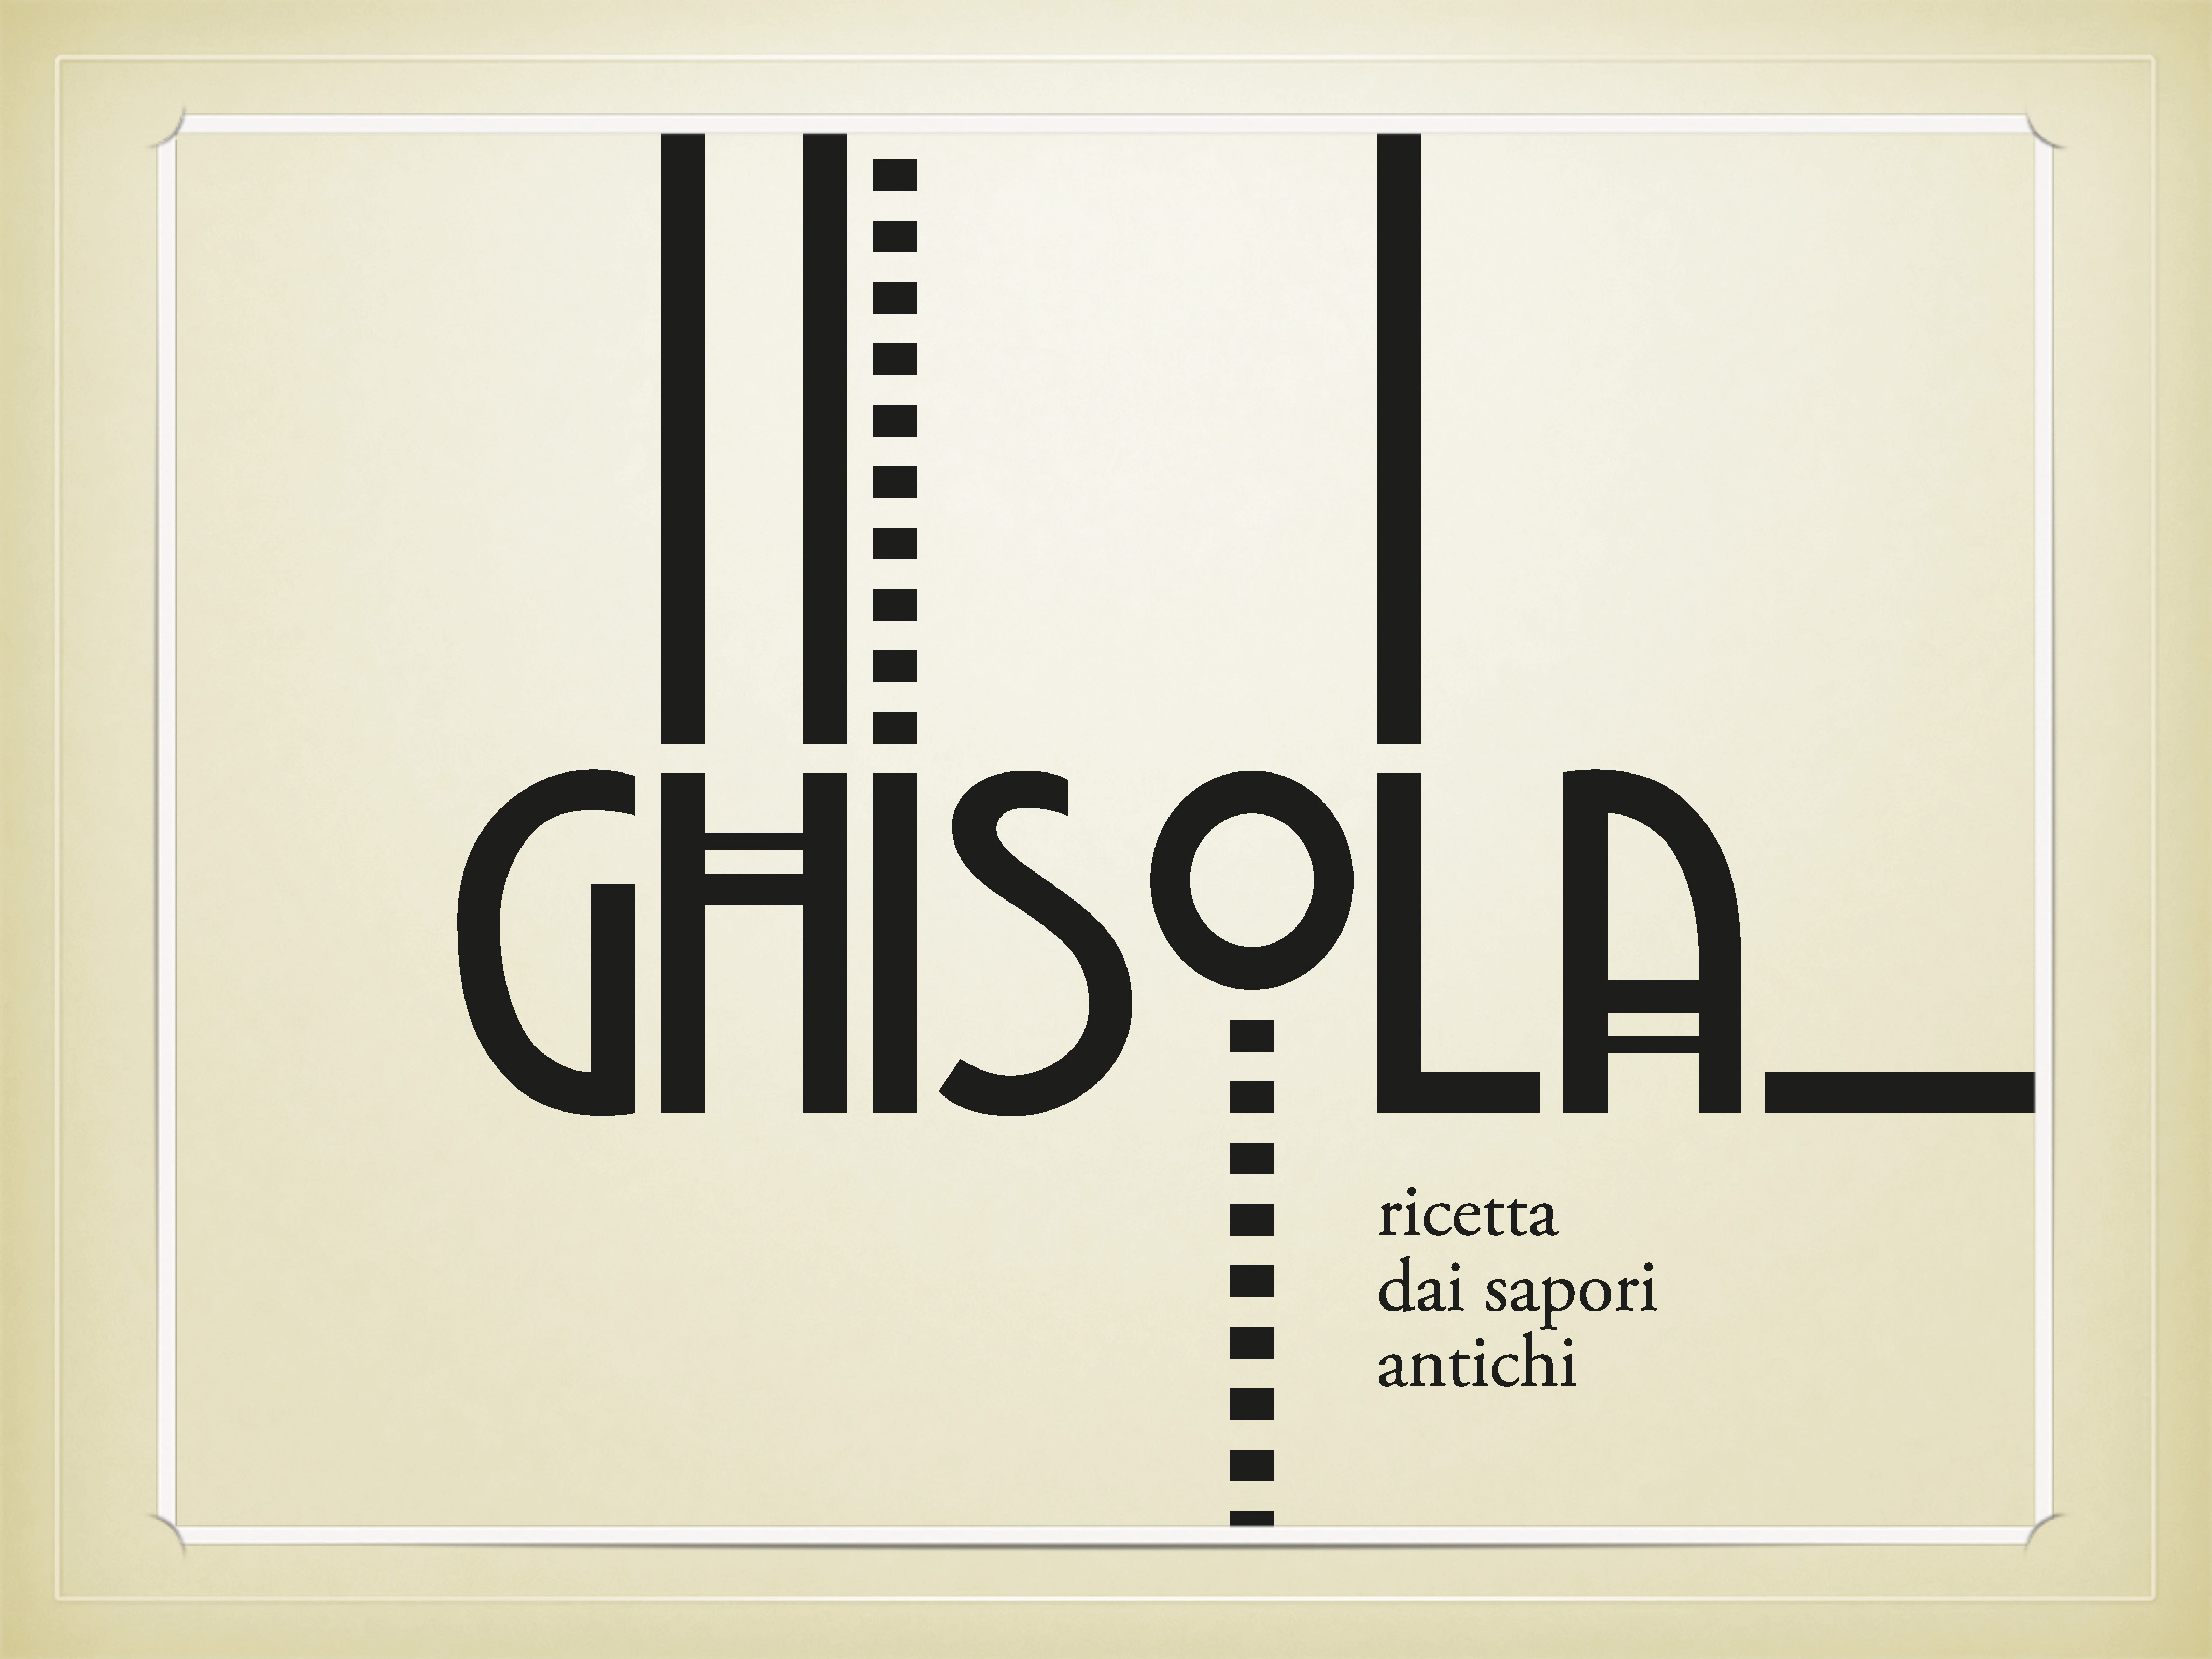 Ghisola: logo e packaging per una ricetta dai sapori antichi